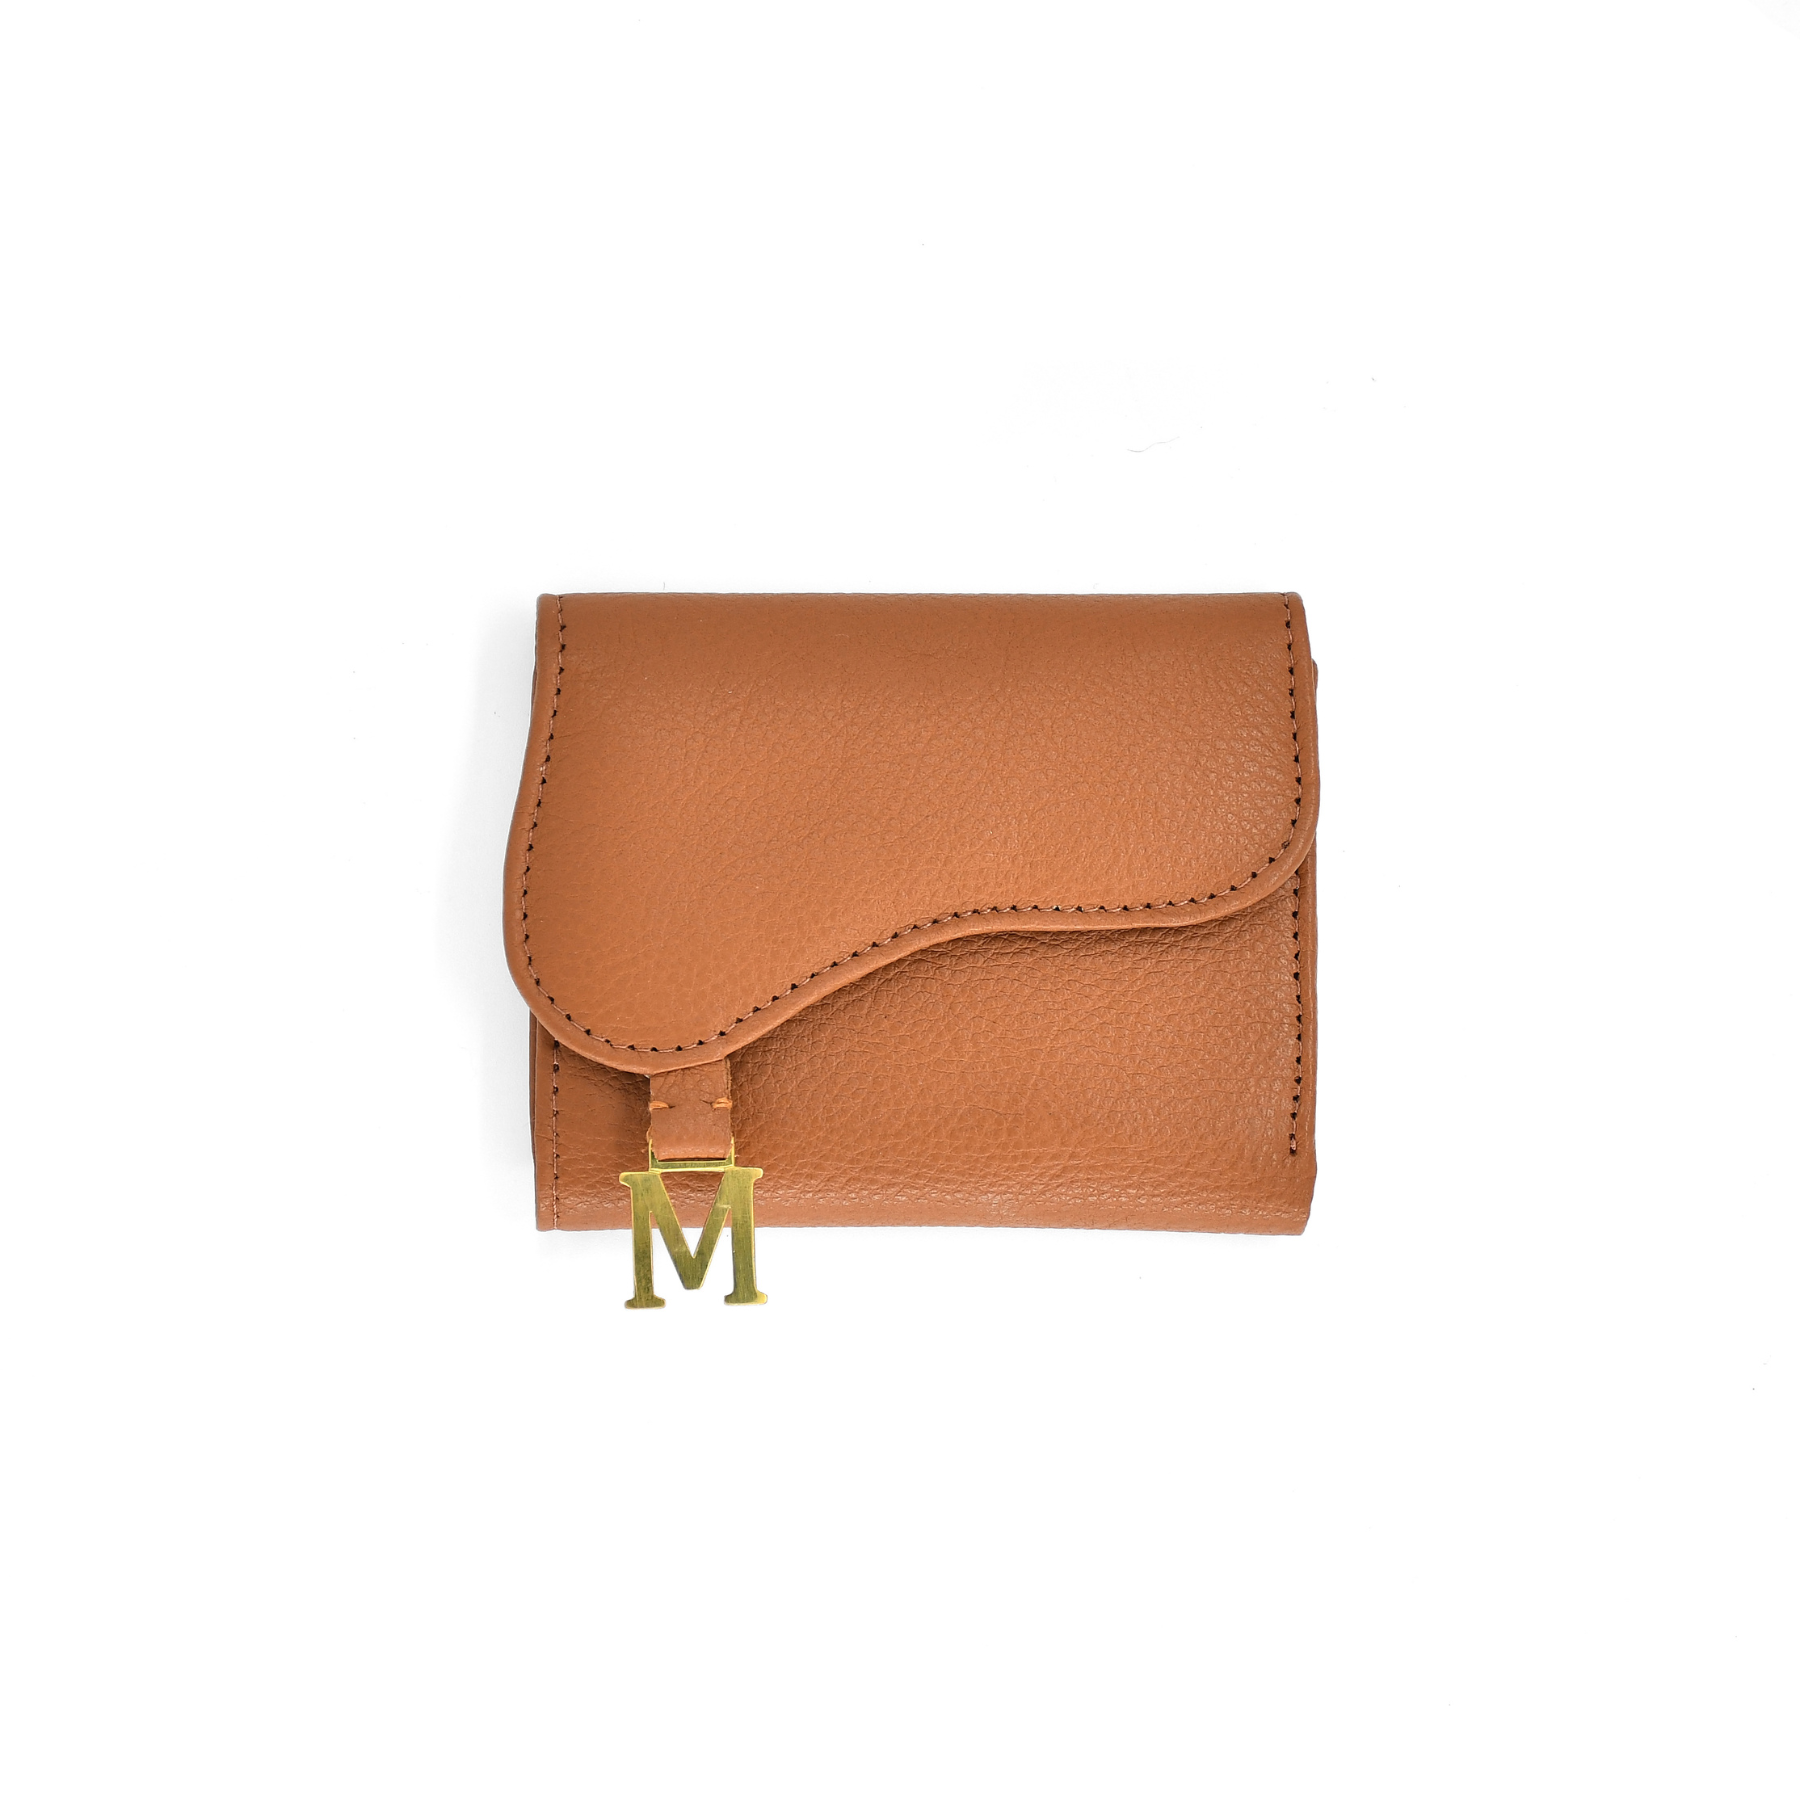 Gaucholife Brown Leather Wallet